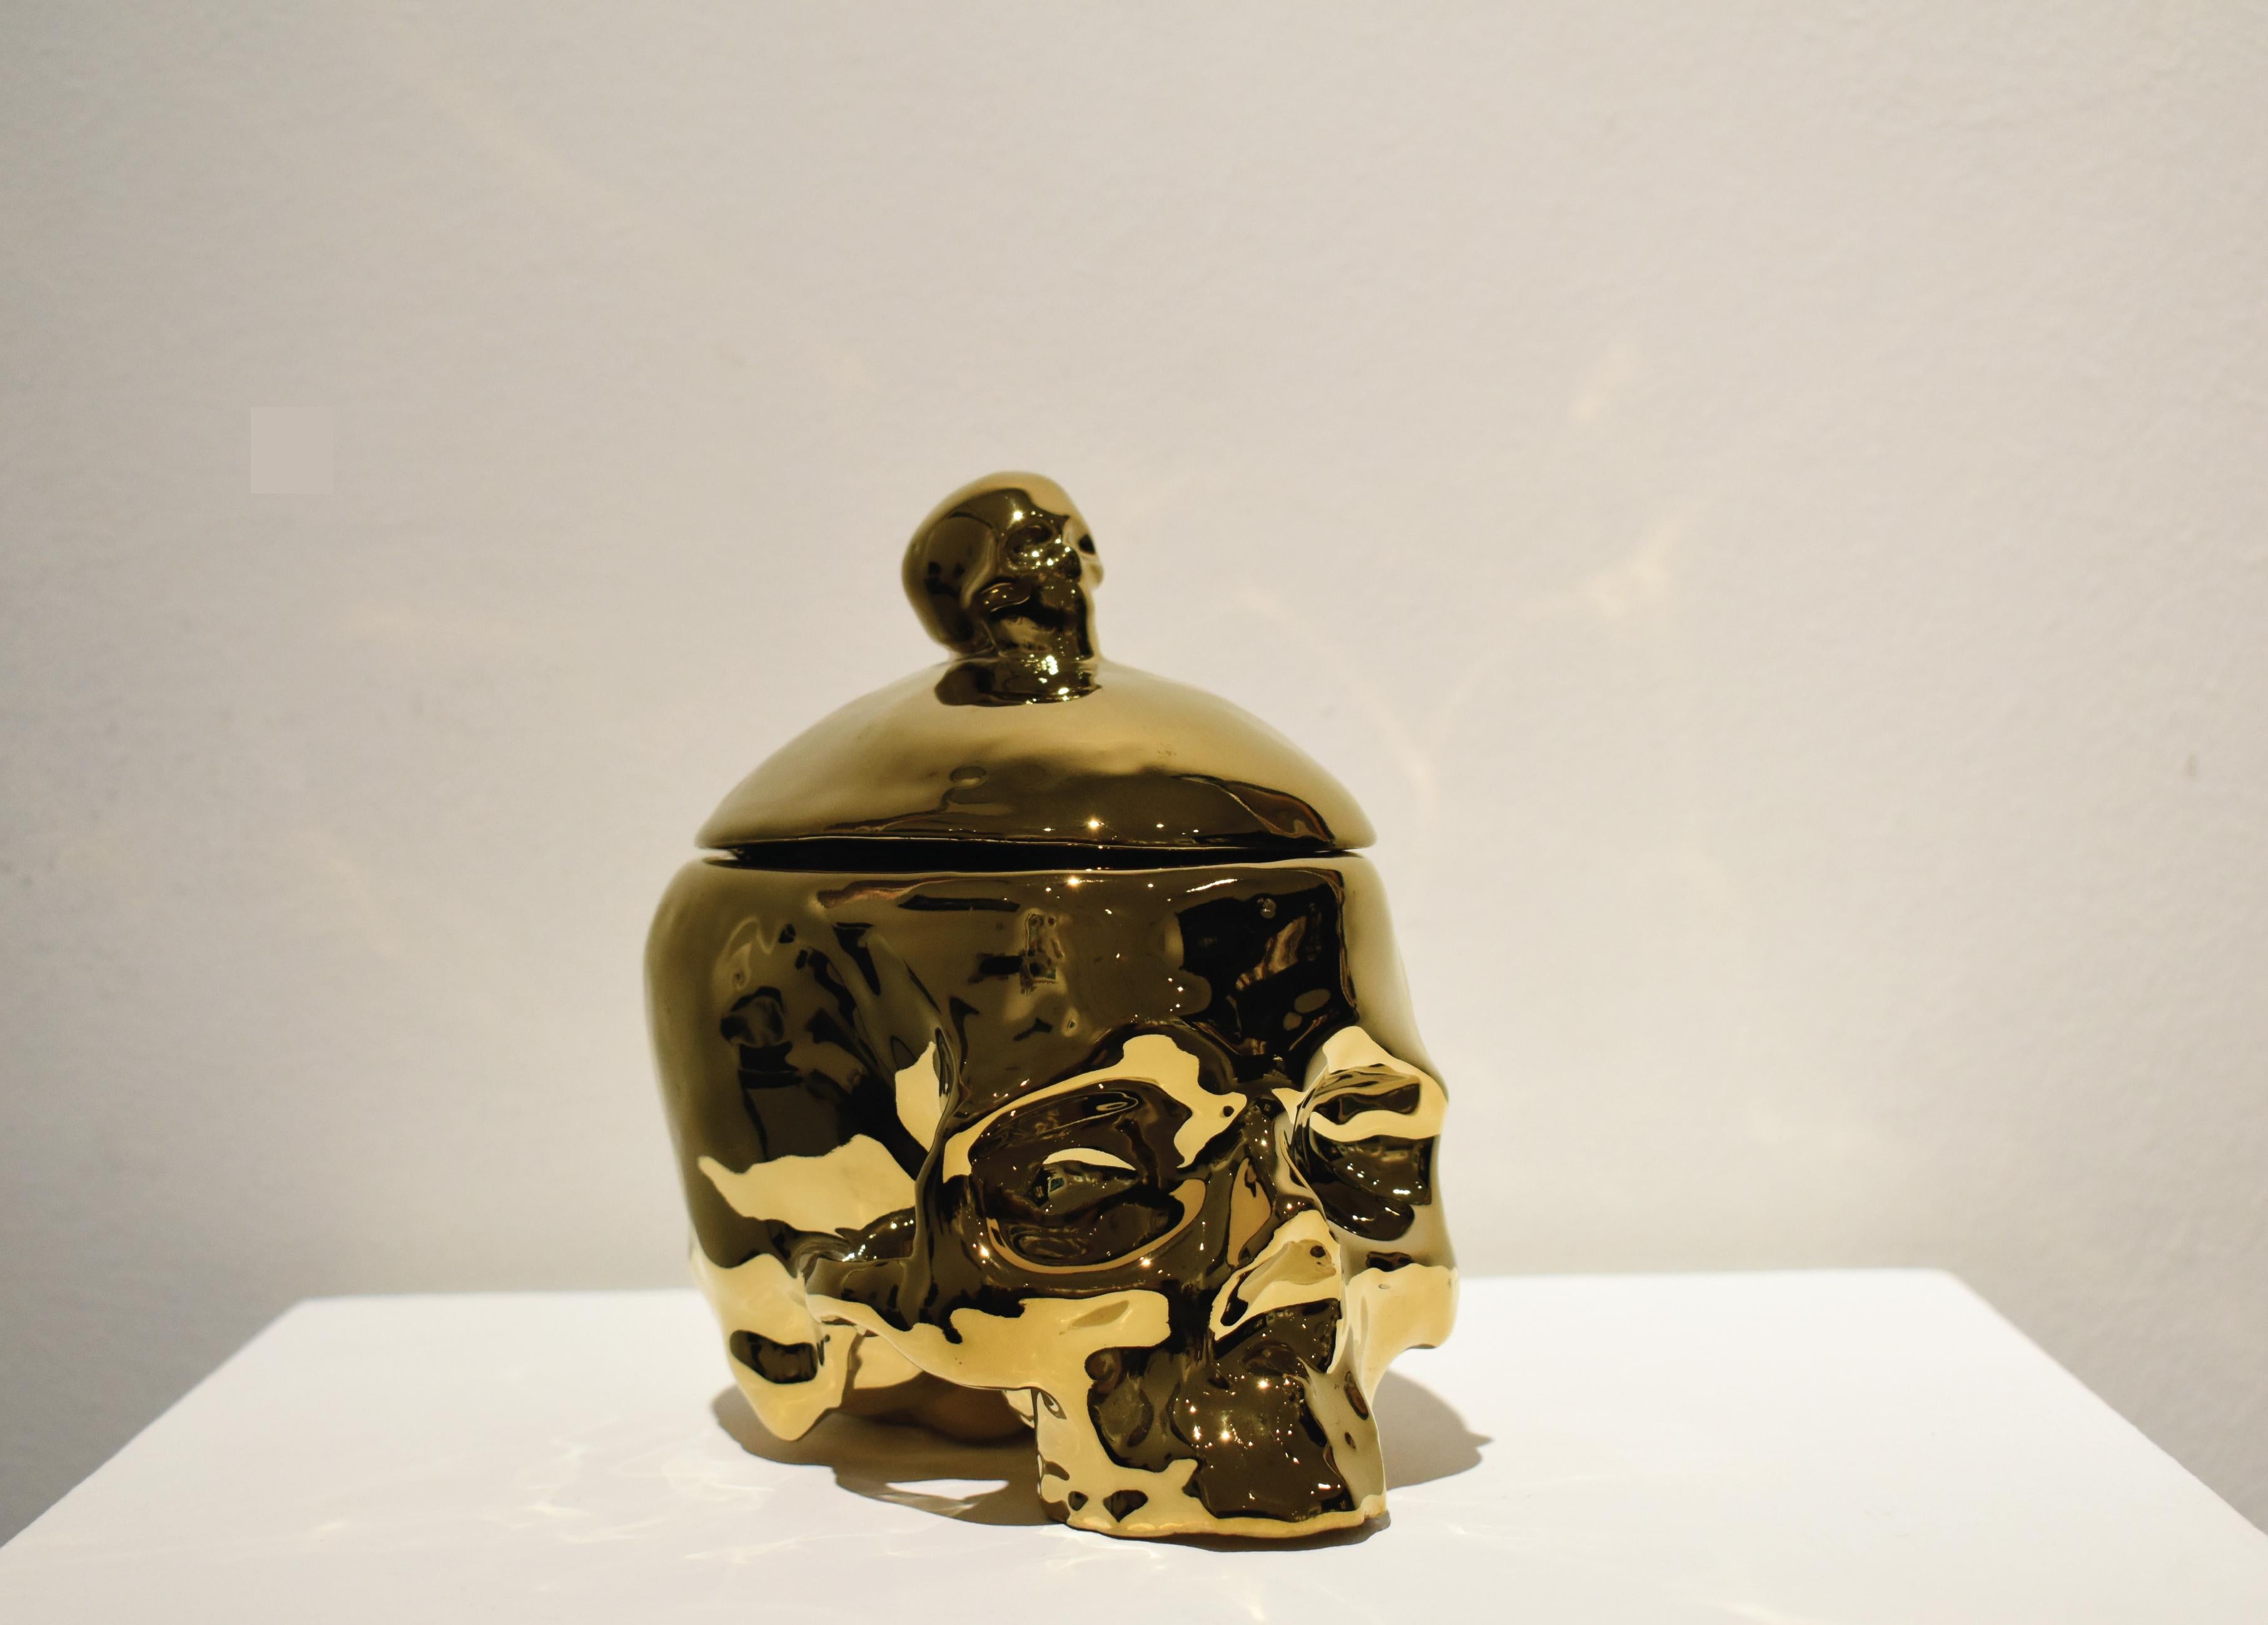 Porzellanskulptur mit Totenkopfform in Goldfarbe, abnehmbarer Deckel (Braun), Figurative Sculpture, von Huang Yulong